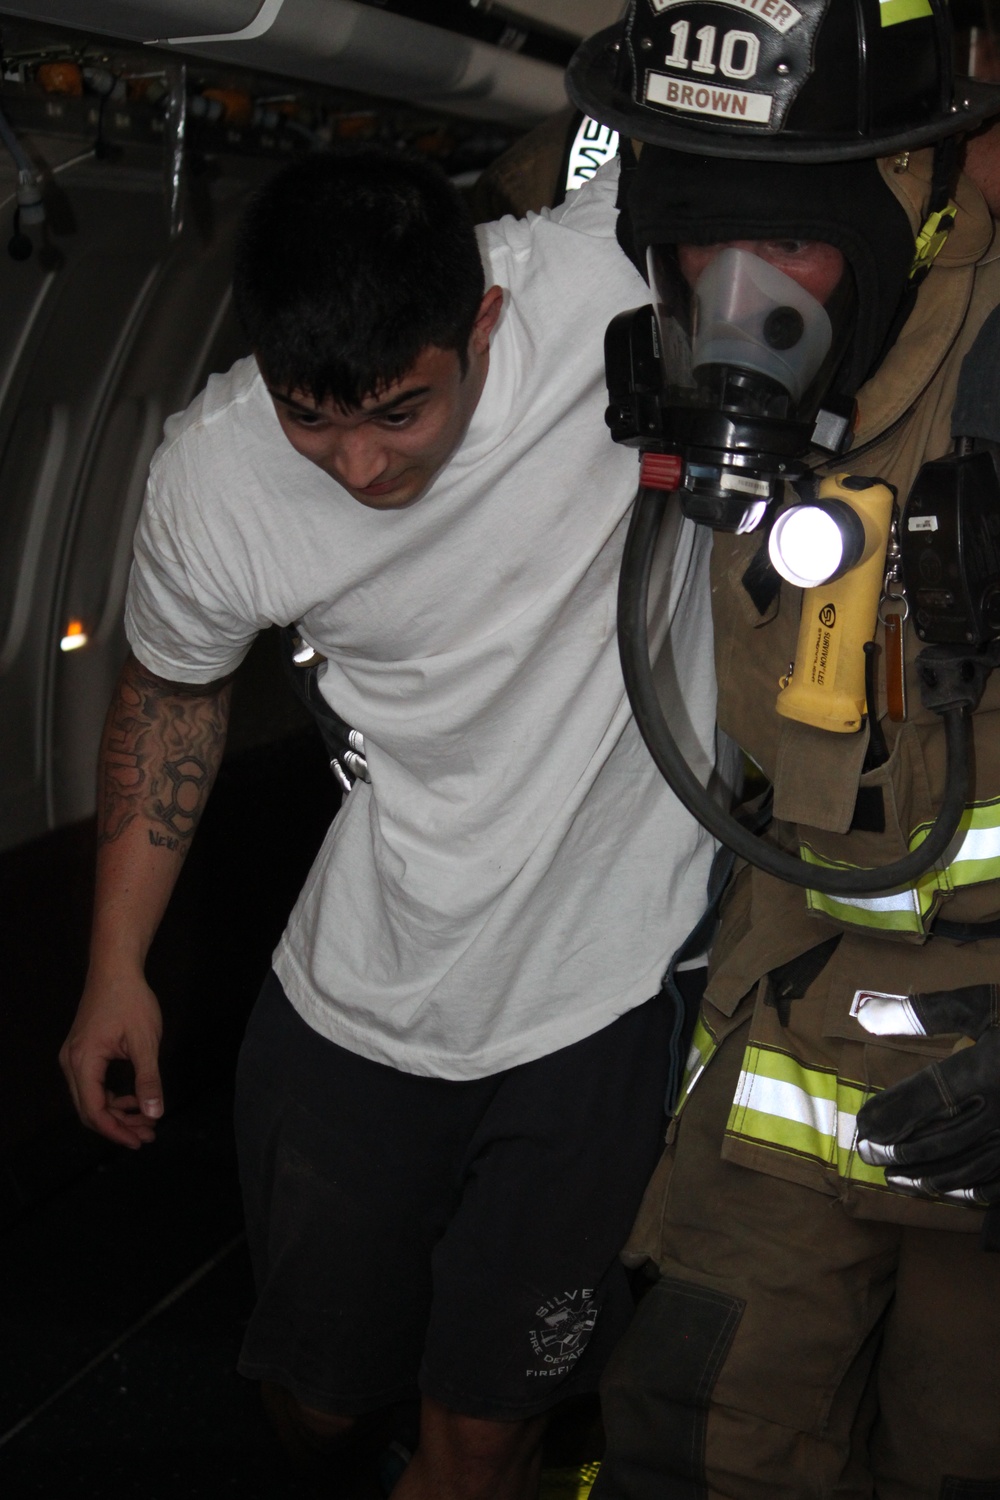 Arizona Guard first responders hone skills in aircraft crash response